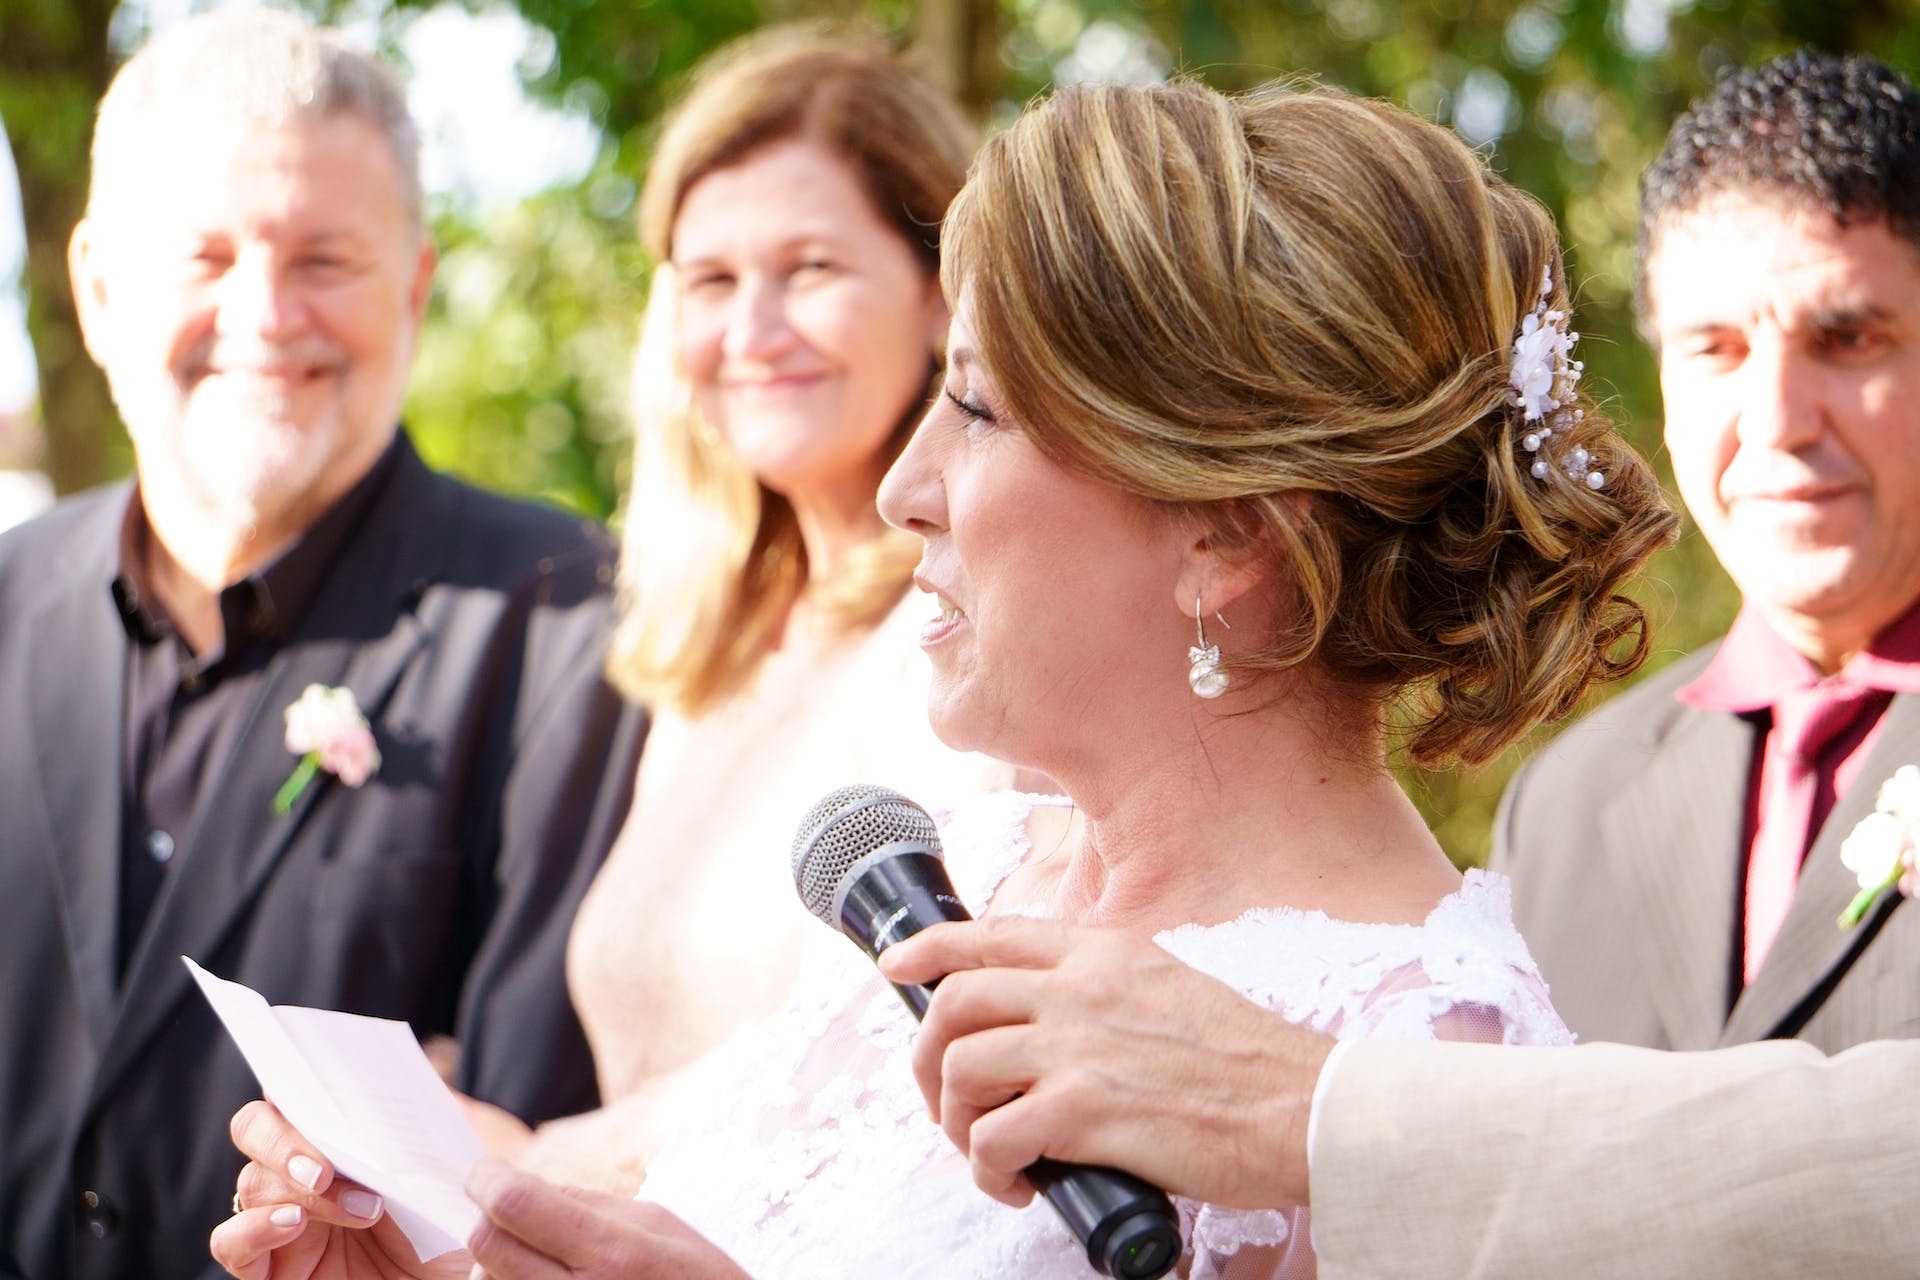 A woman giving a speech at a wedding | Source: Pexels